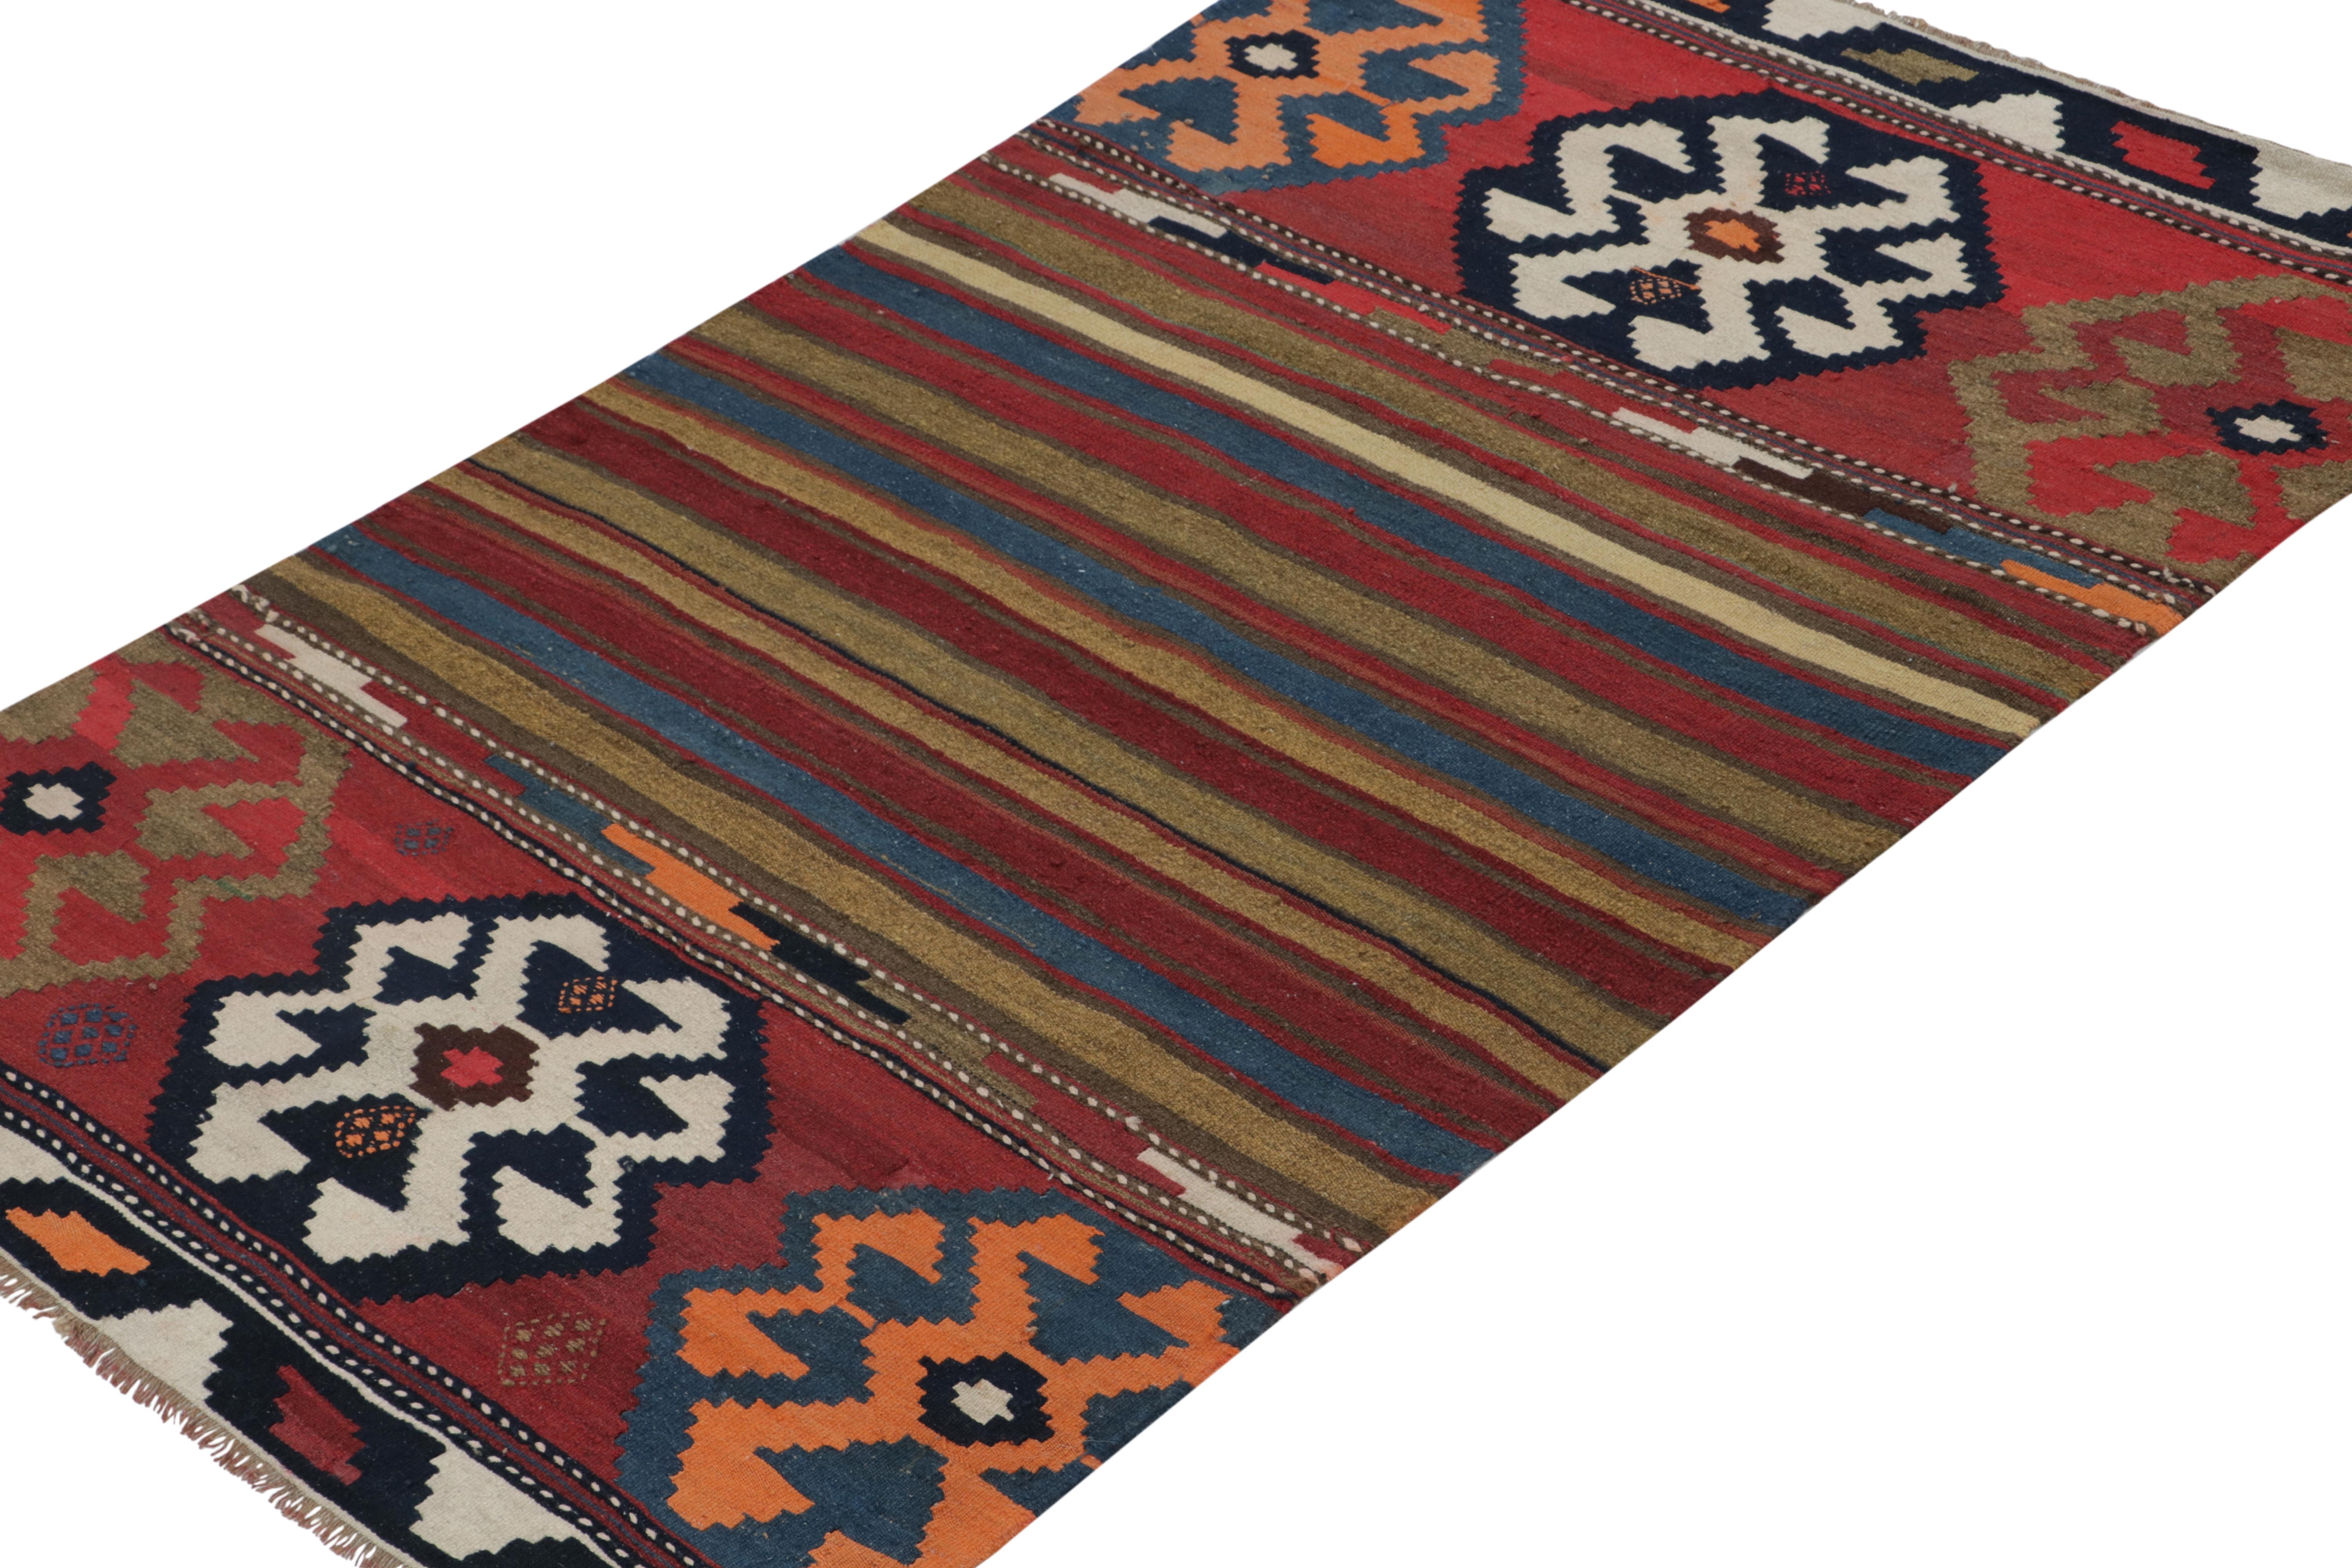 Tribal Vintage Persian Kilim Rug in Polychromatic Geometric Patterns by Rug & Kilim For Sale